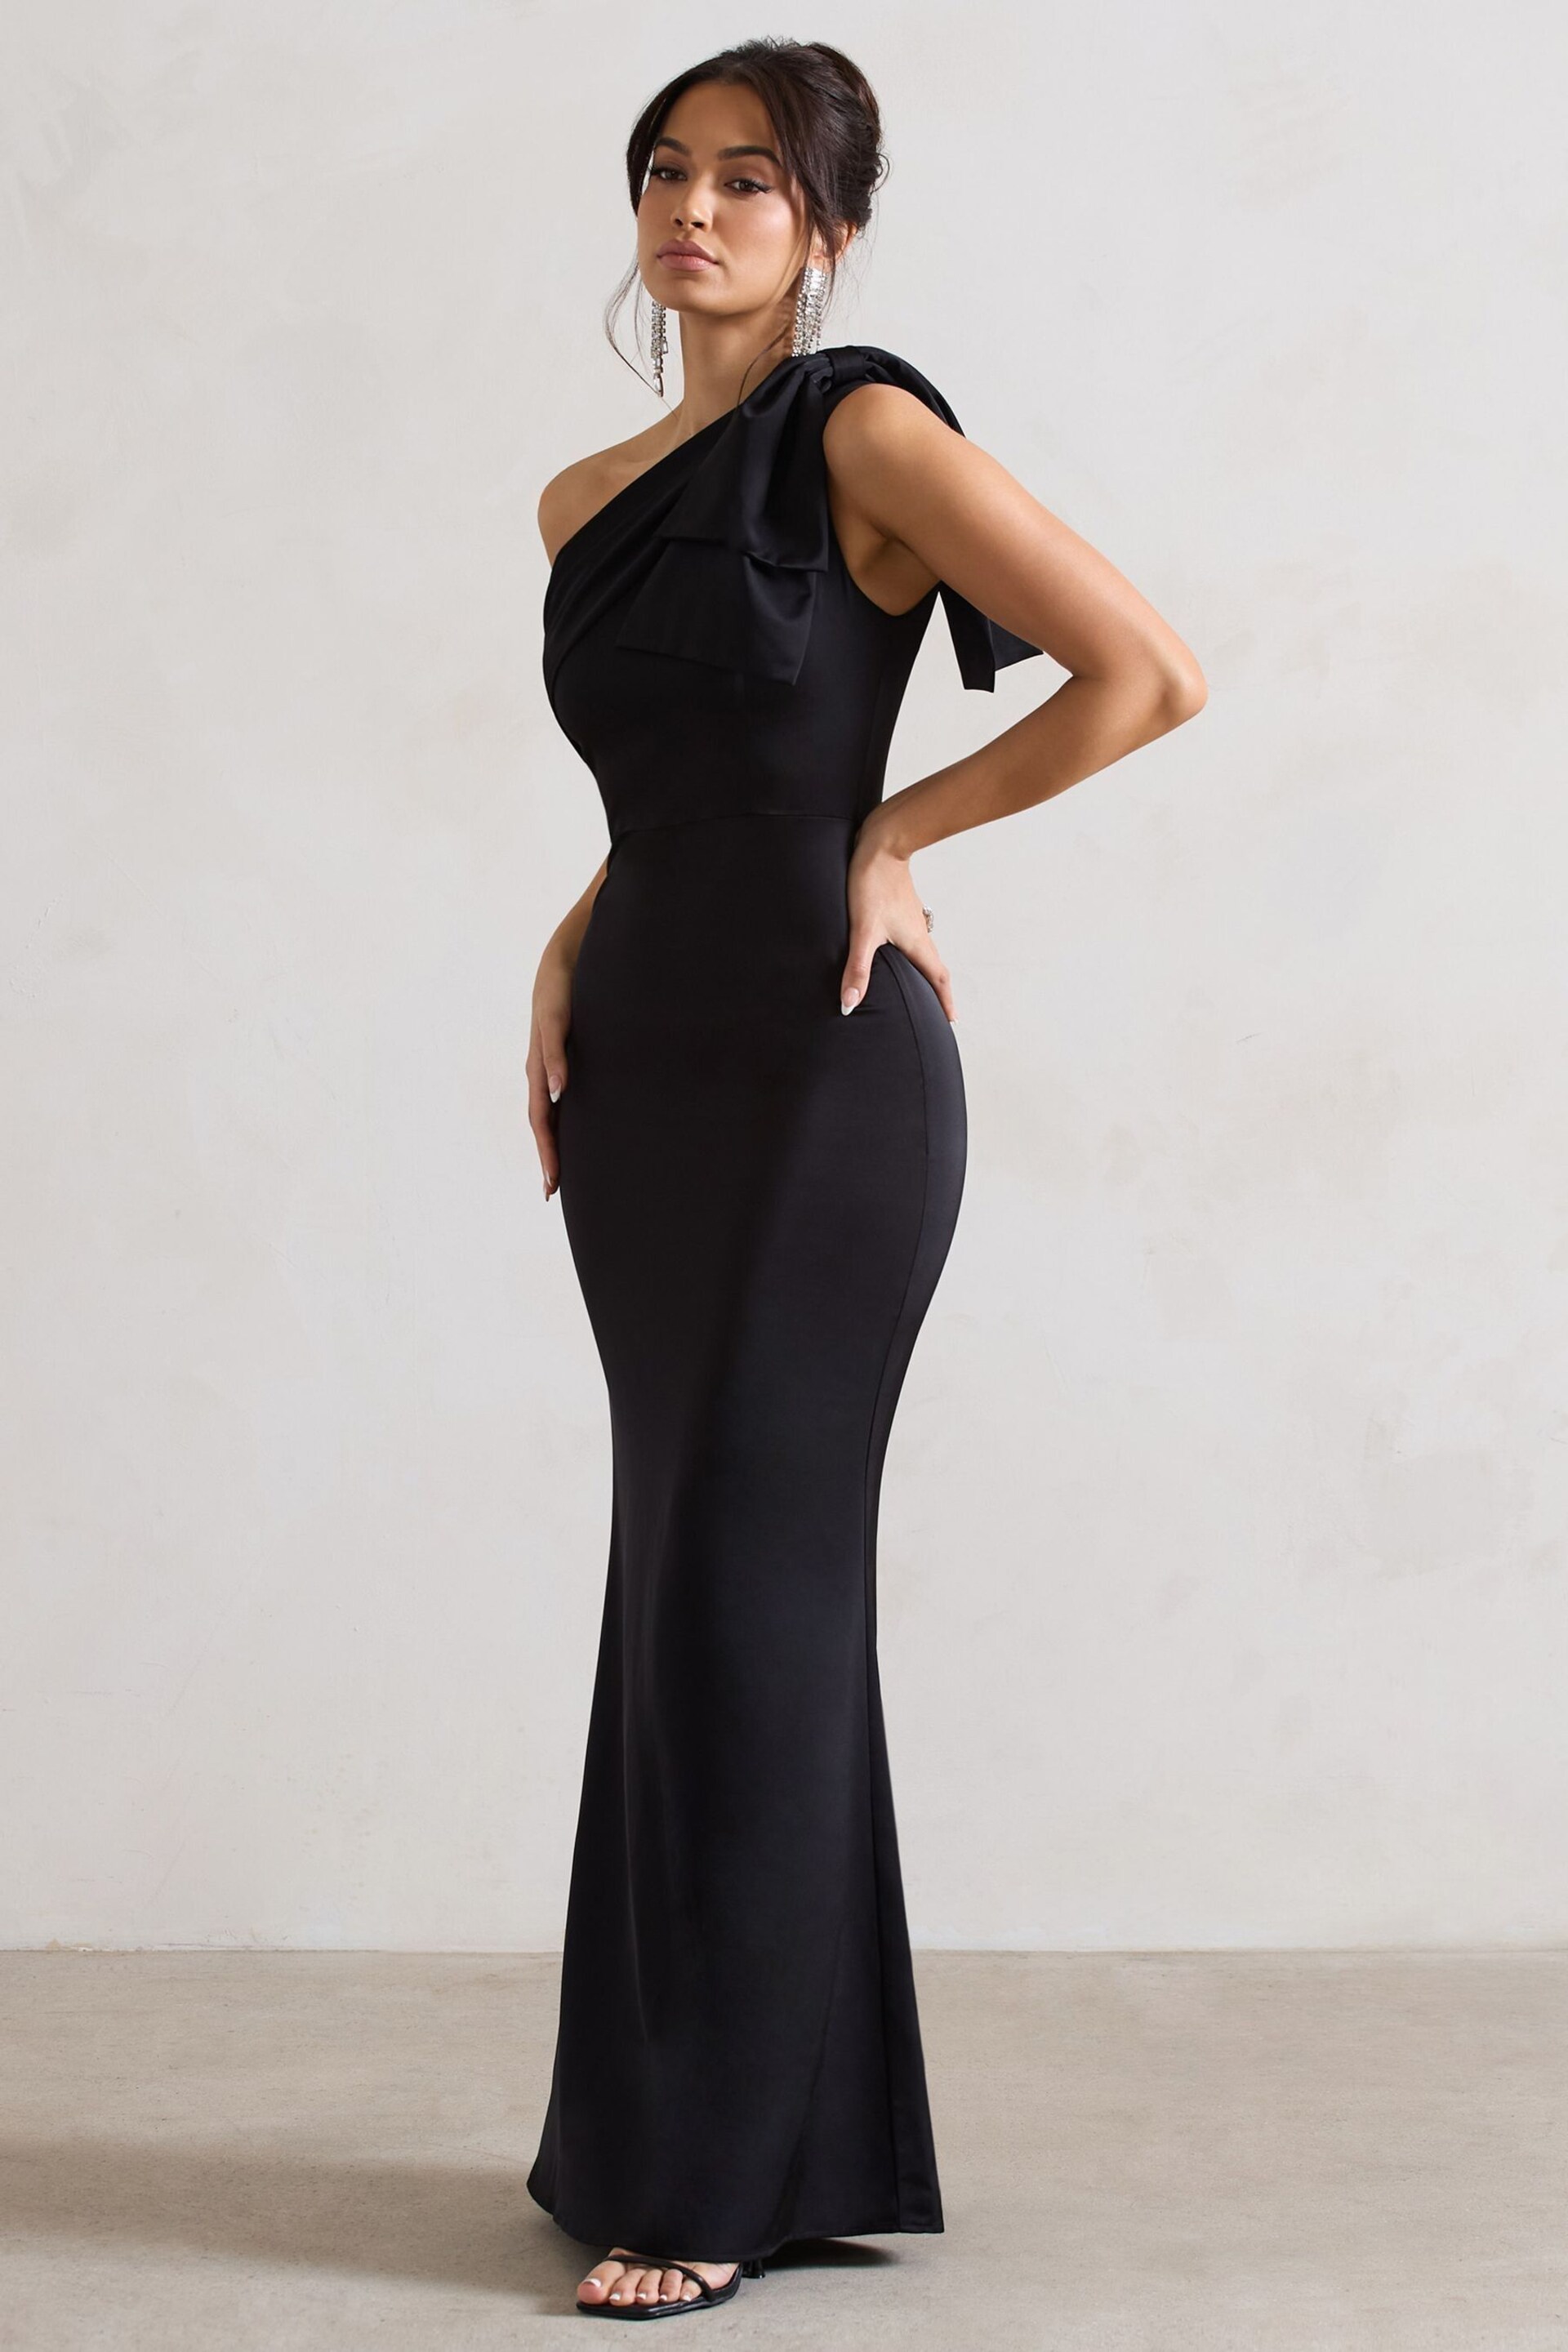 Club L Black Lady Satin Asymmetric Maxi Dress With Bow - Image 3 of 5